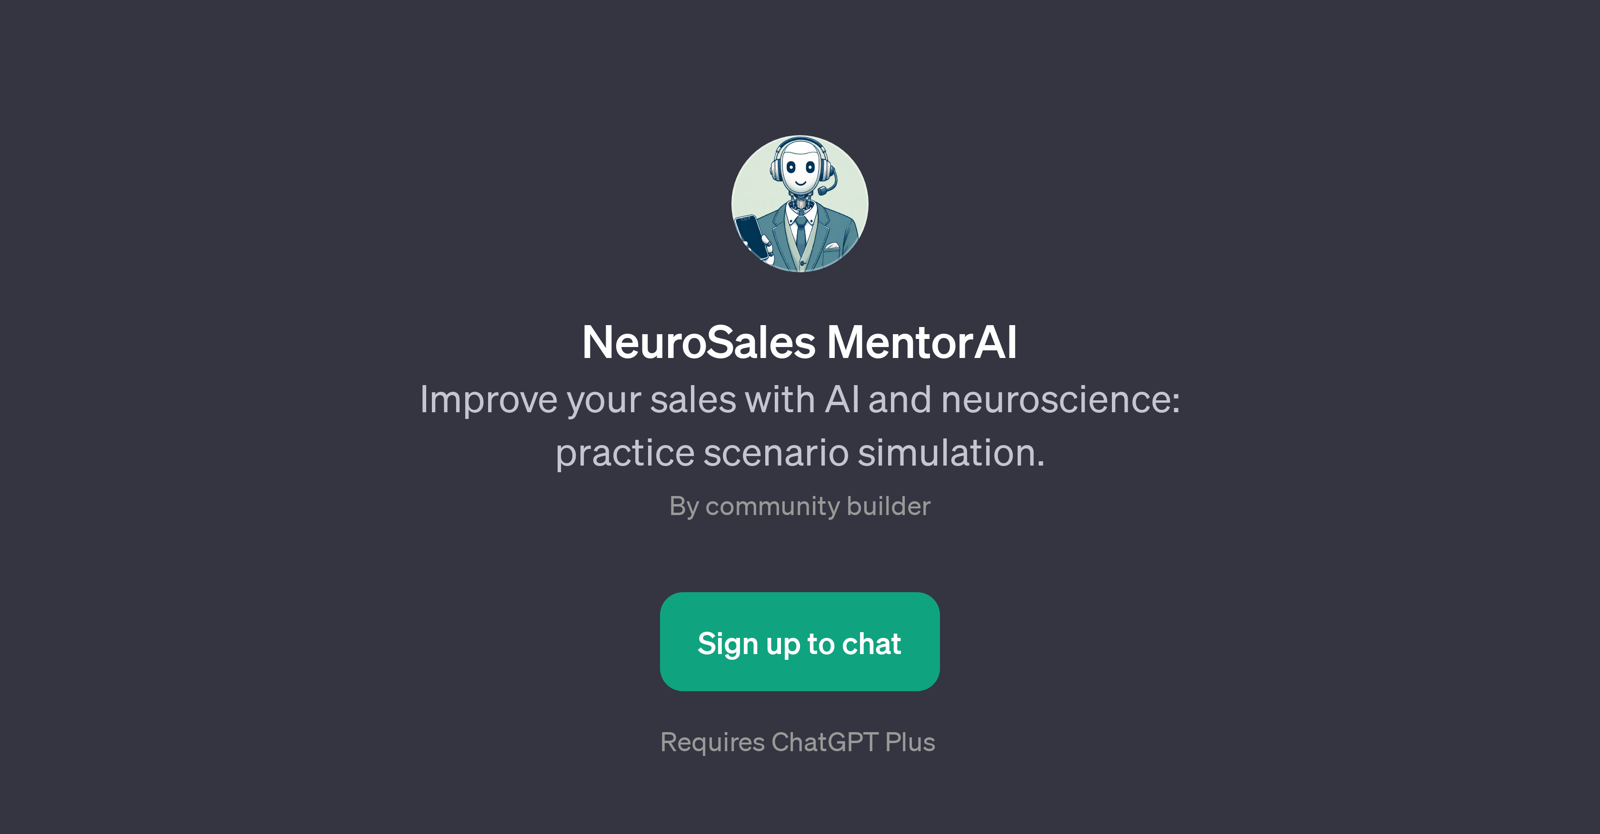 NeuroSales MentorAI website